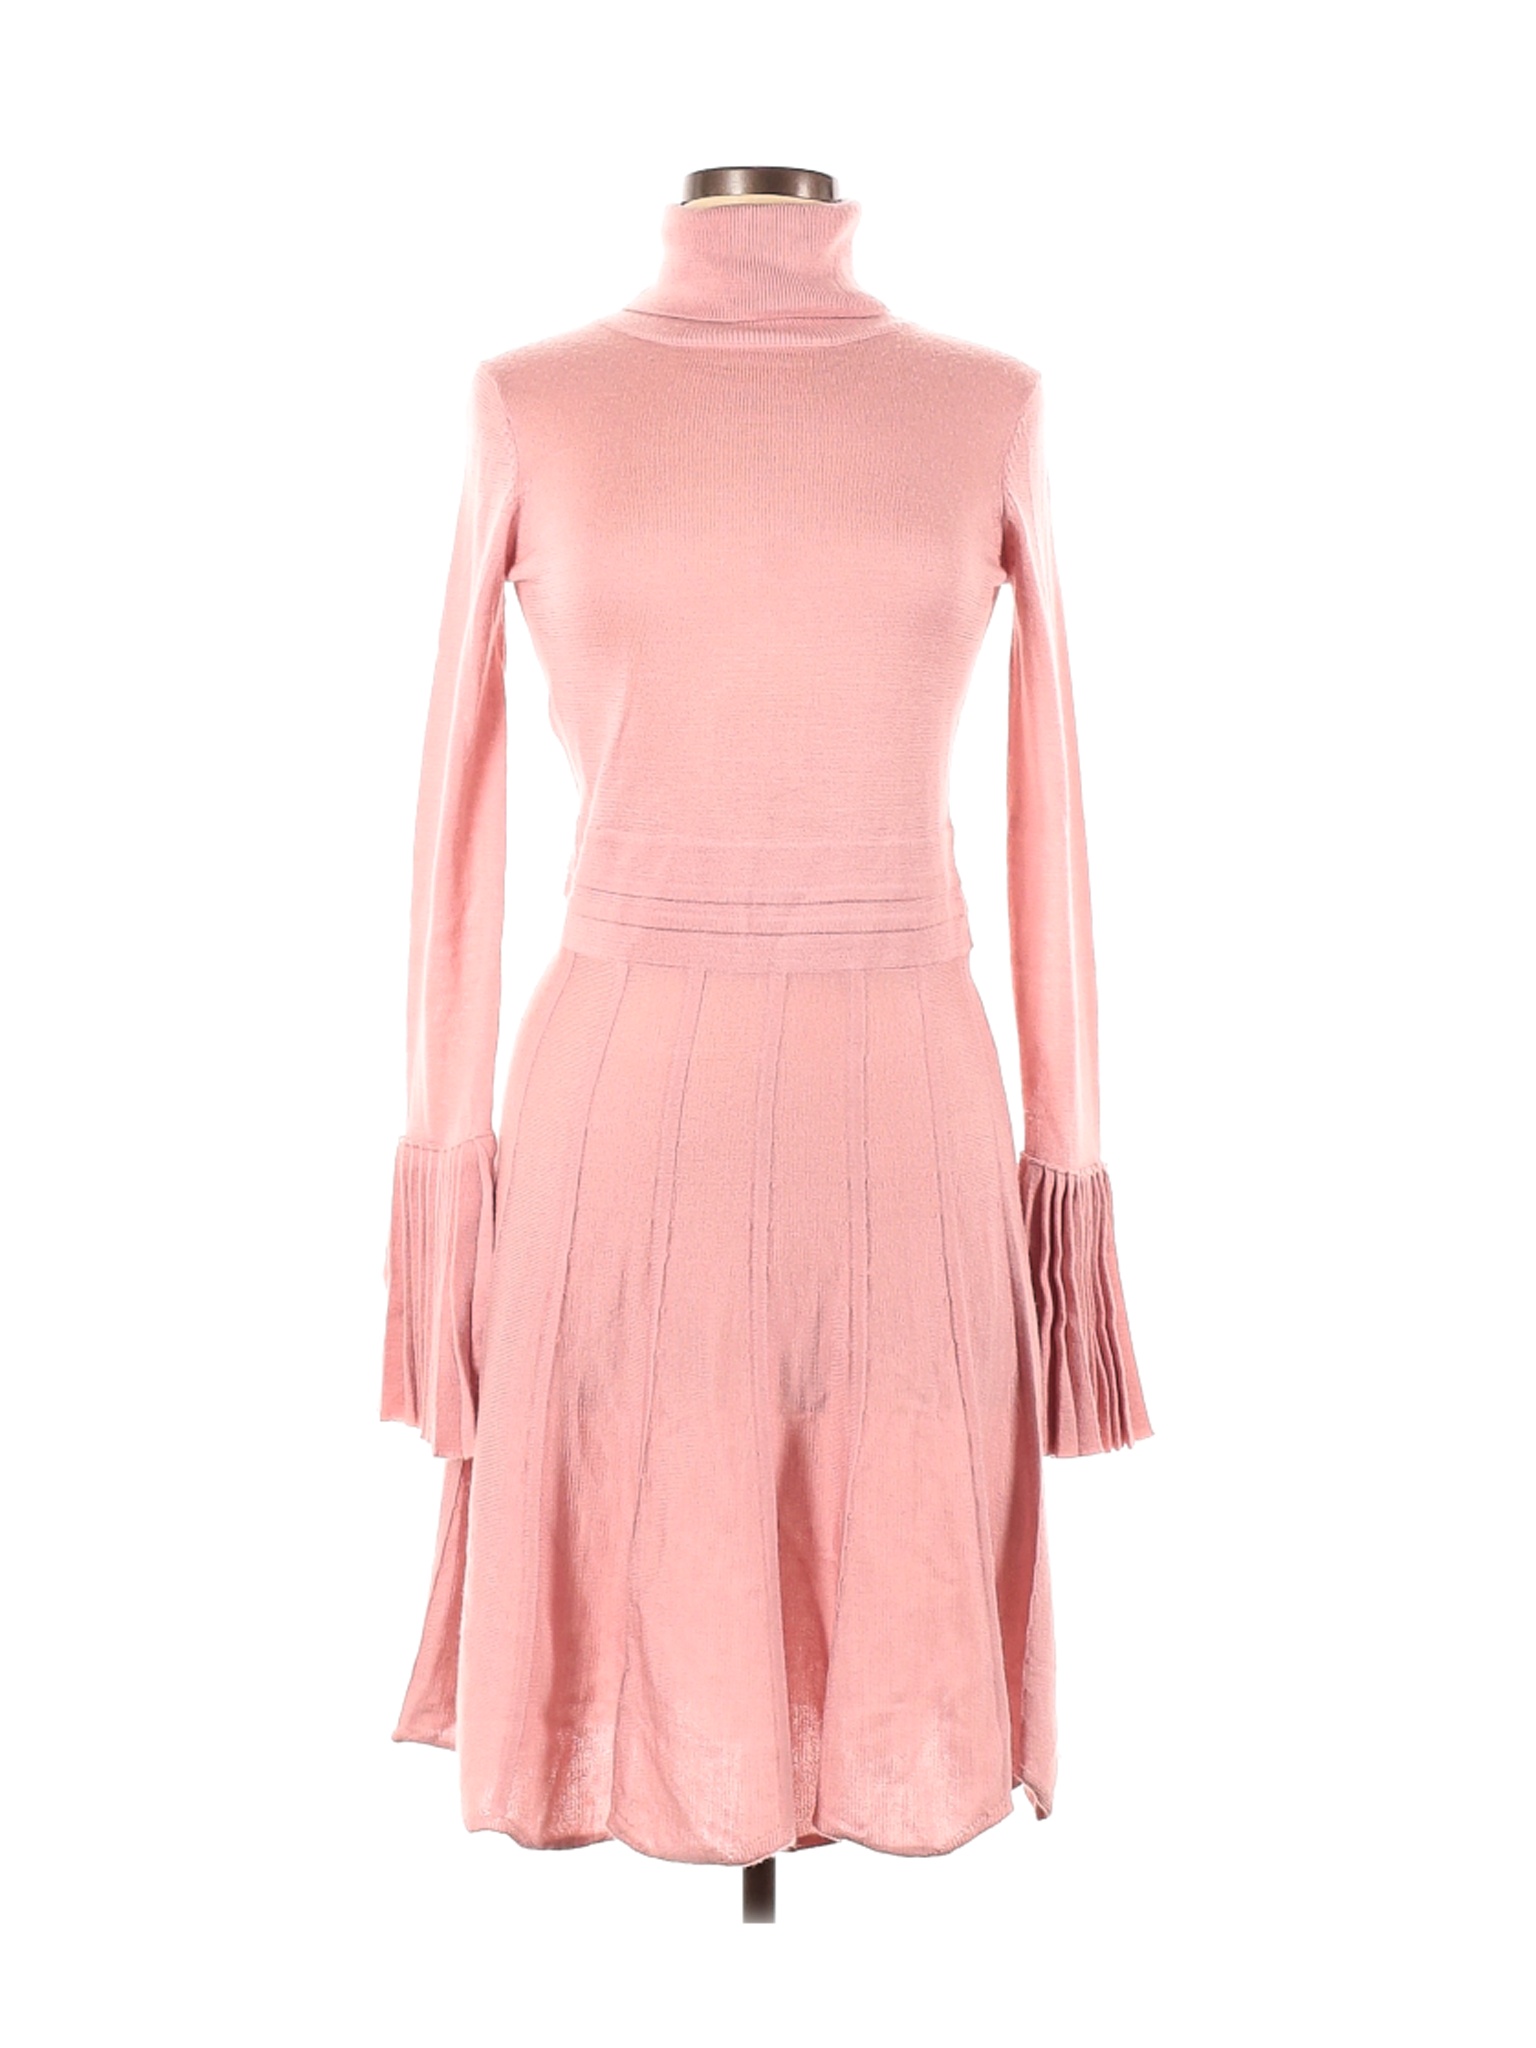 CAARA Women Pink Casual Dress M | eBay